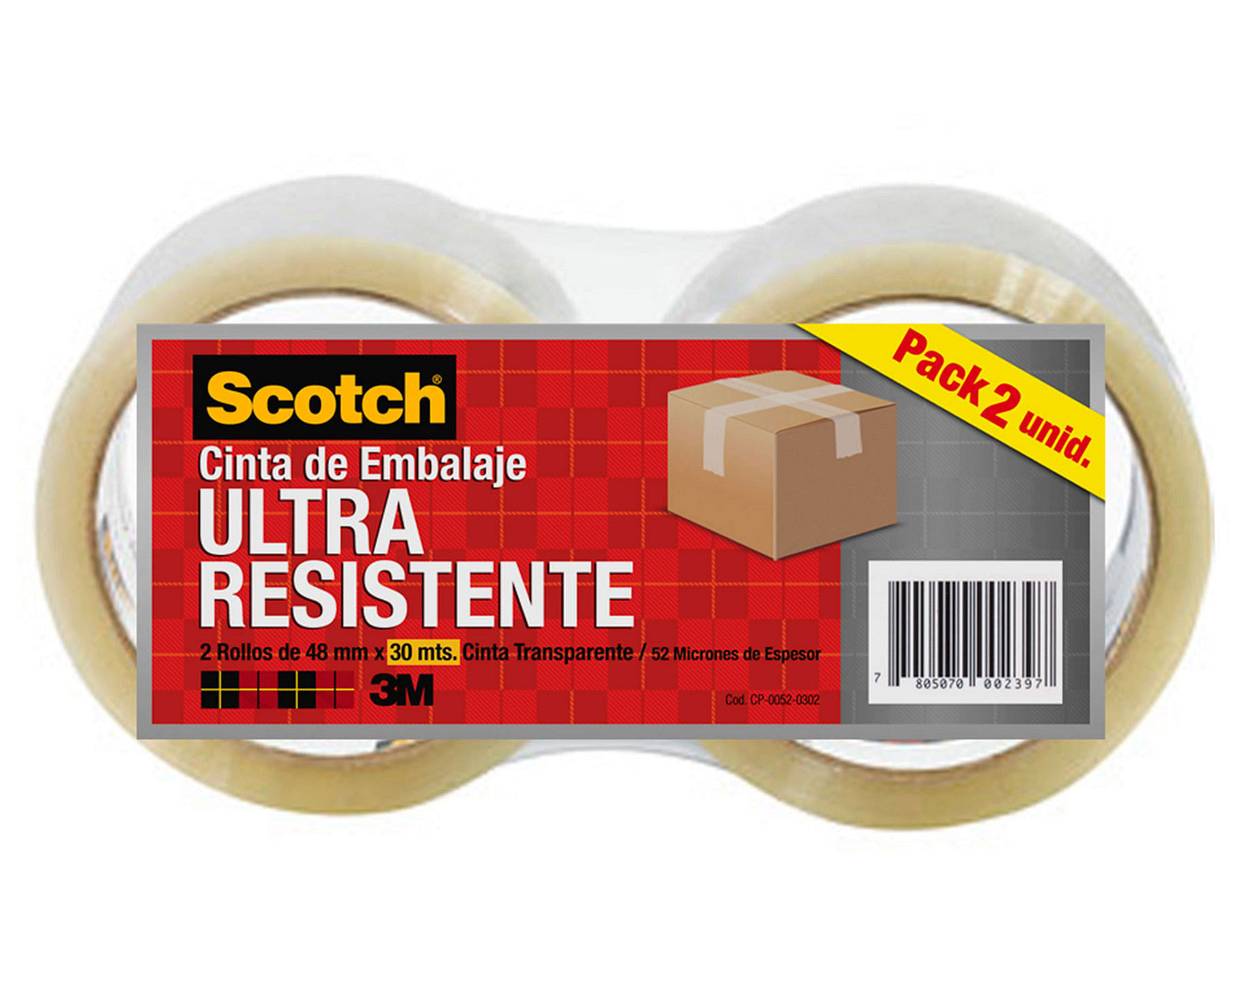 Scotch pack cinta de embalaje ultra resistente (2 x 30 mt)